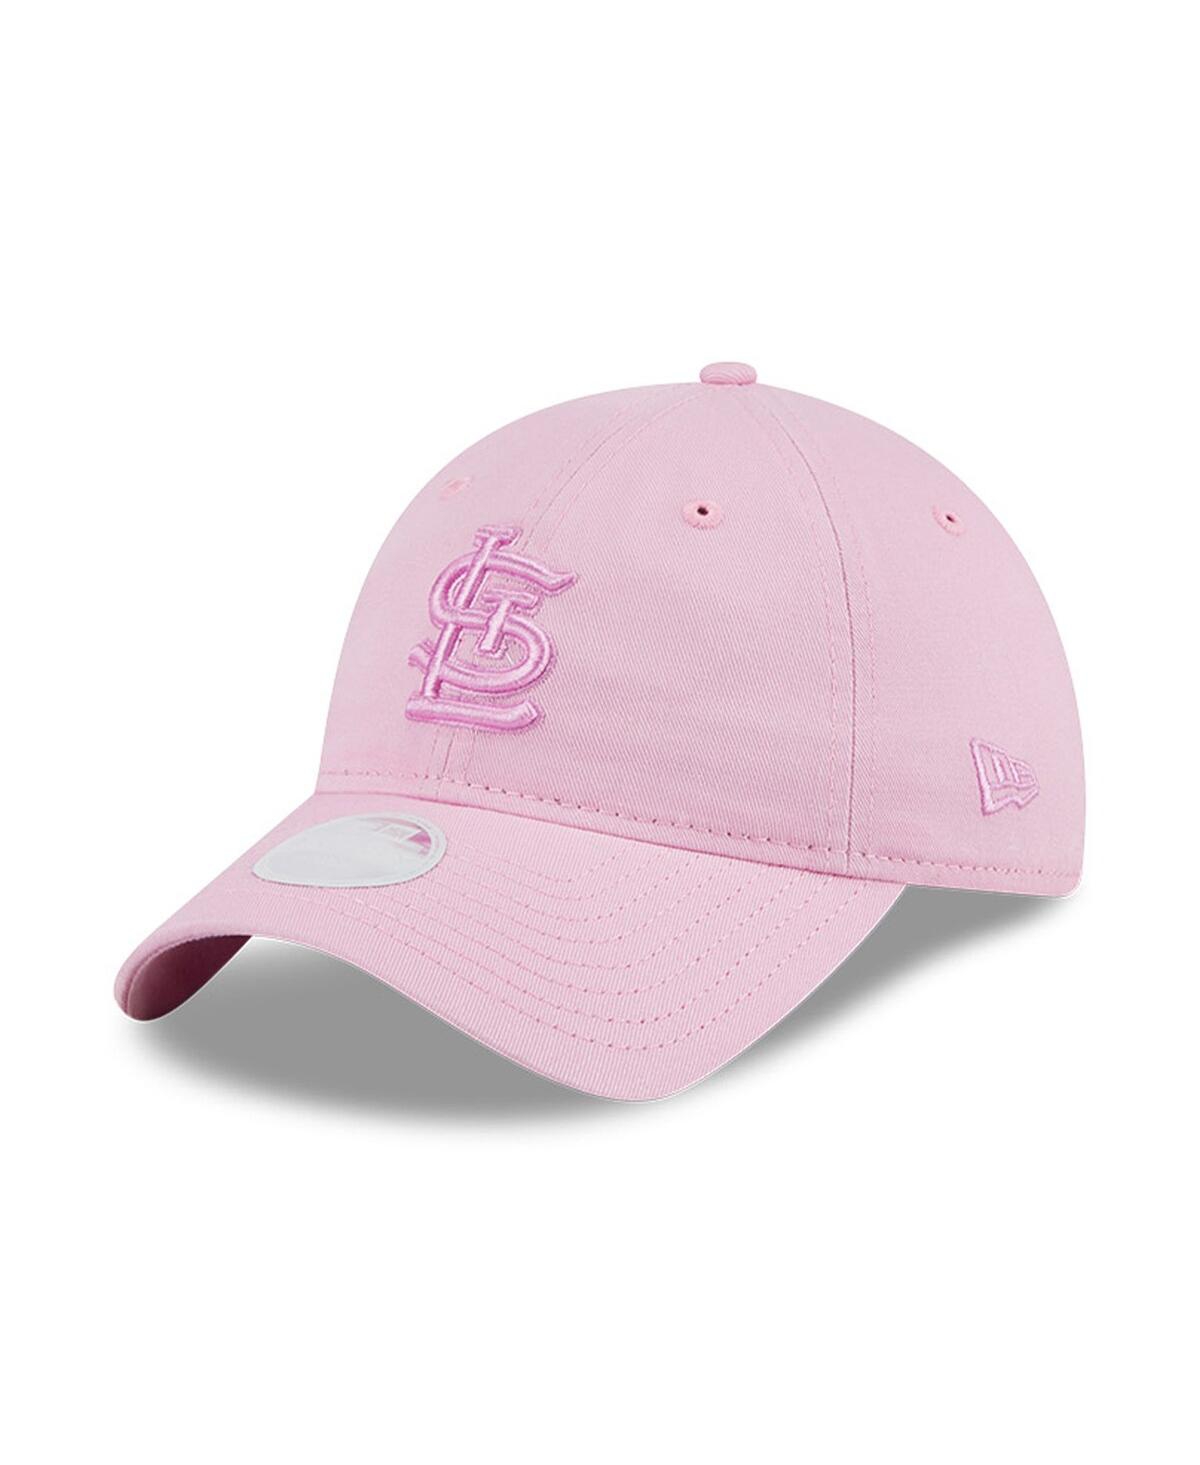 Women's St. Louis Cardinals Fondant Pink 9Twenty Adjustable Hat - Pink